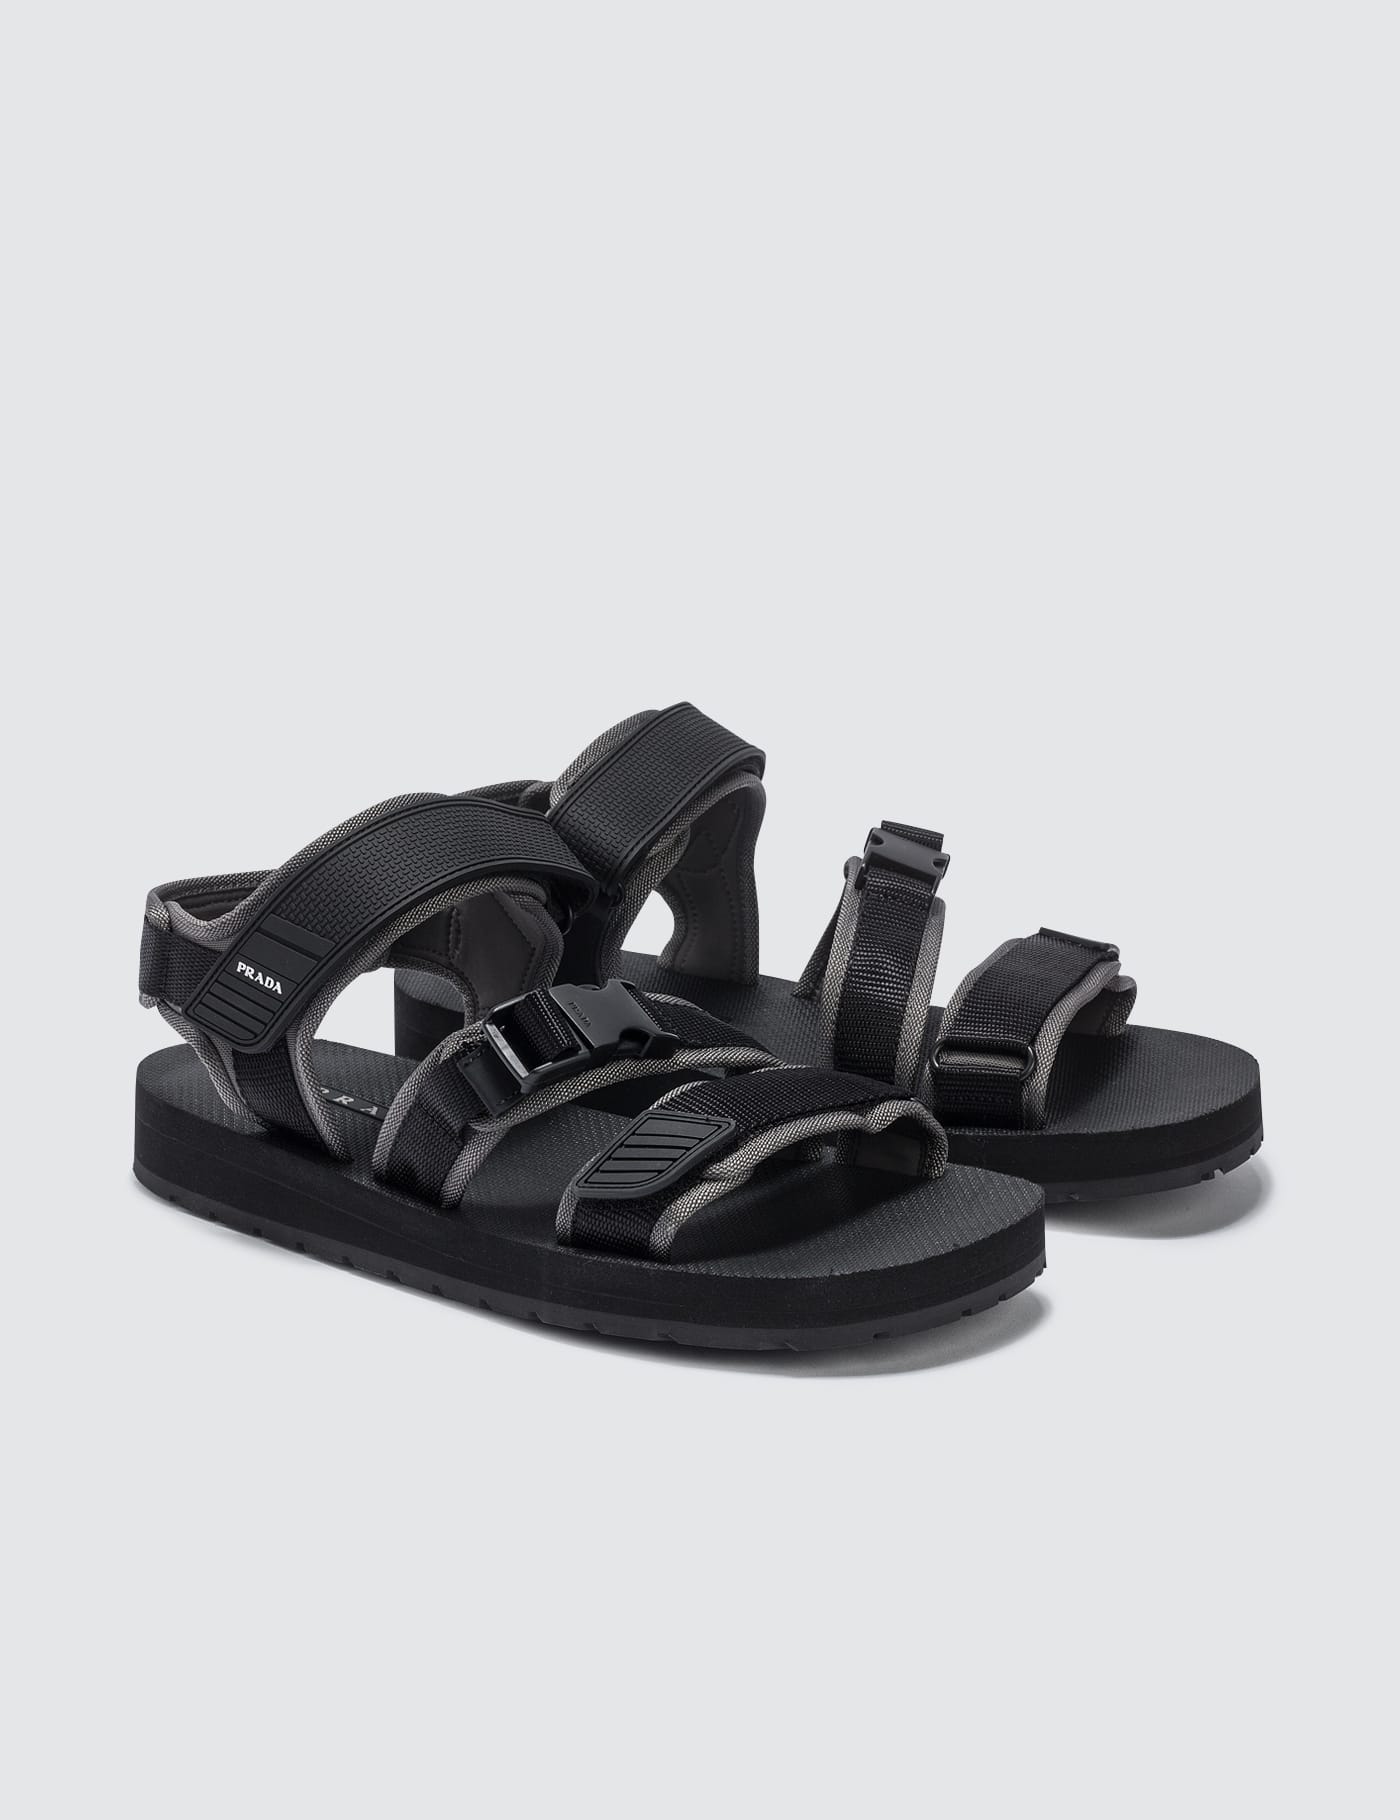 prada black tech sandals